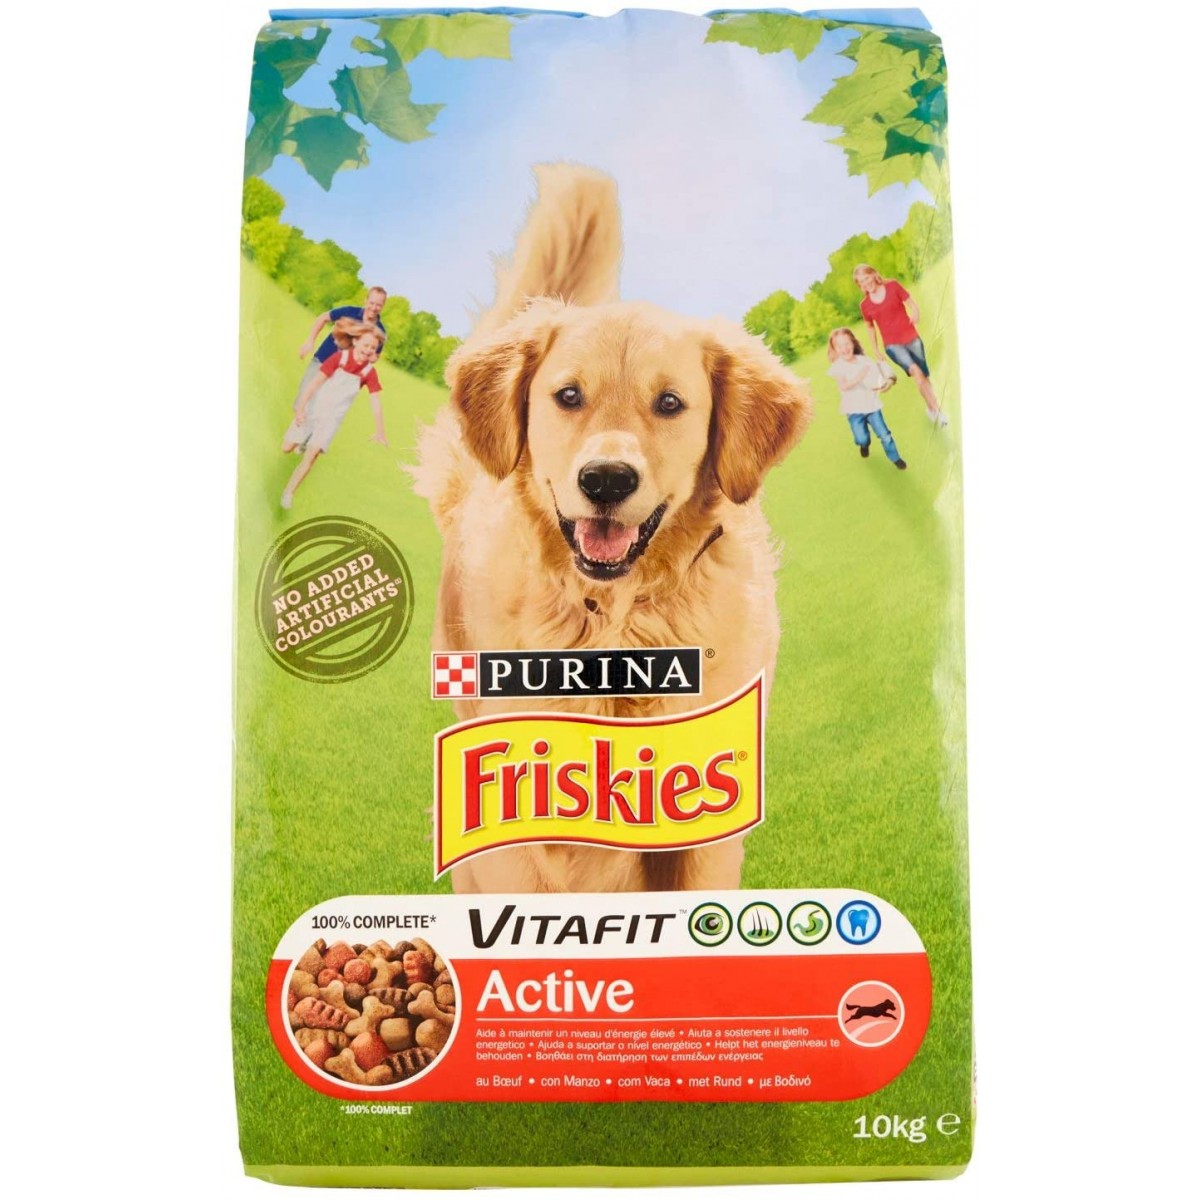 Crocchette per cane Vitafit Active con Manzo, 10 kg - Purina Friskies